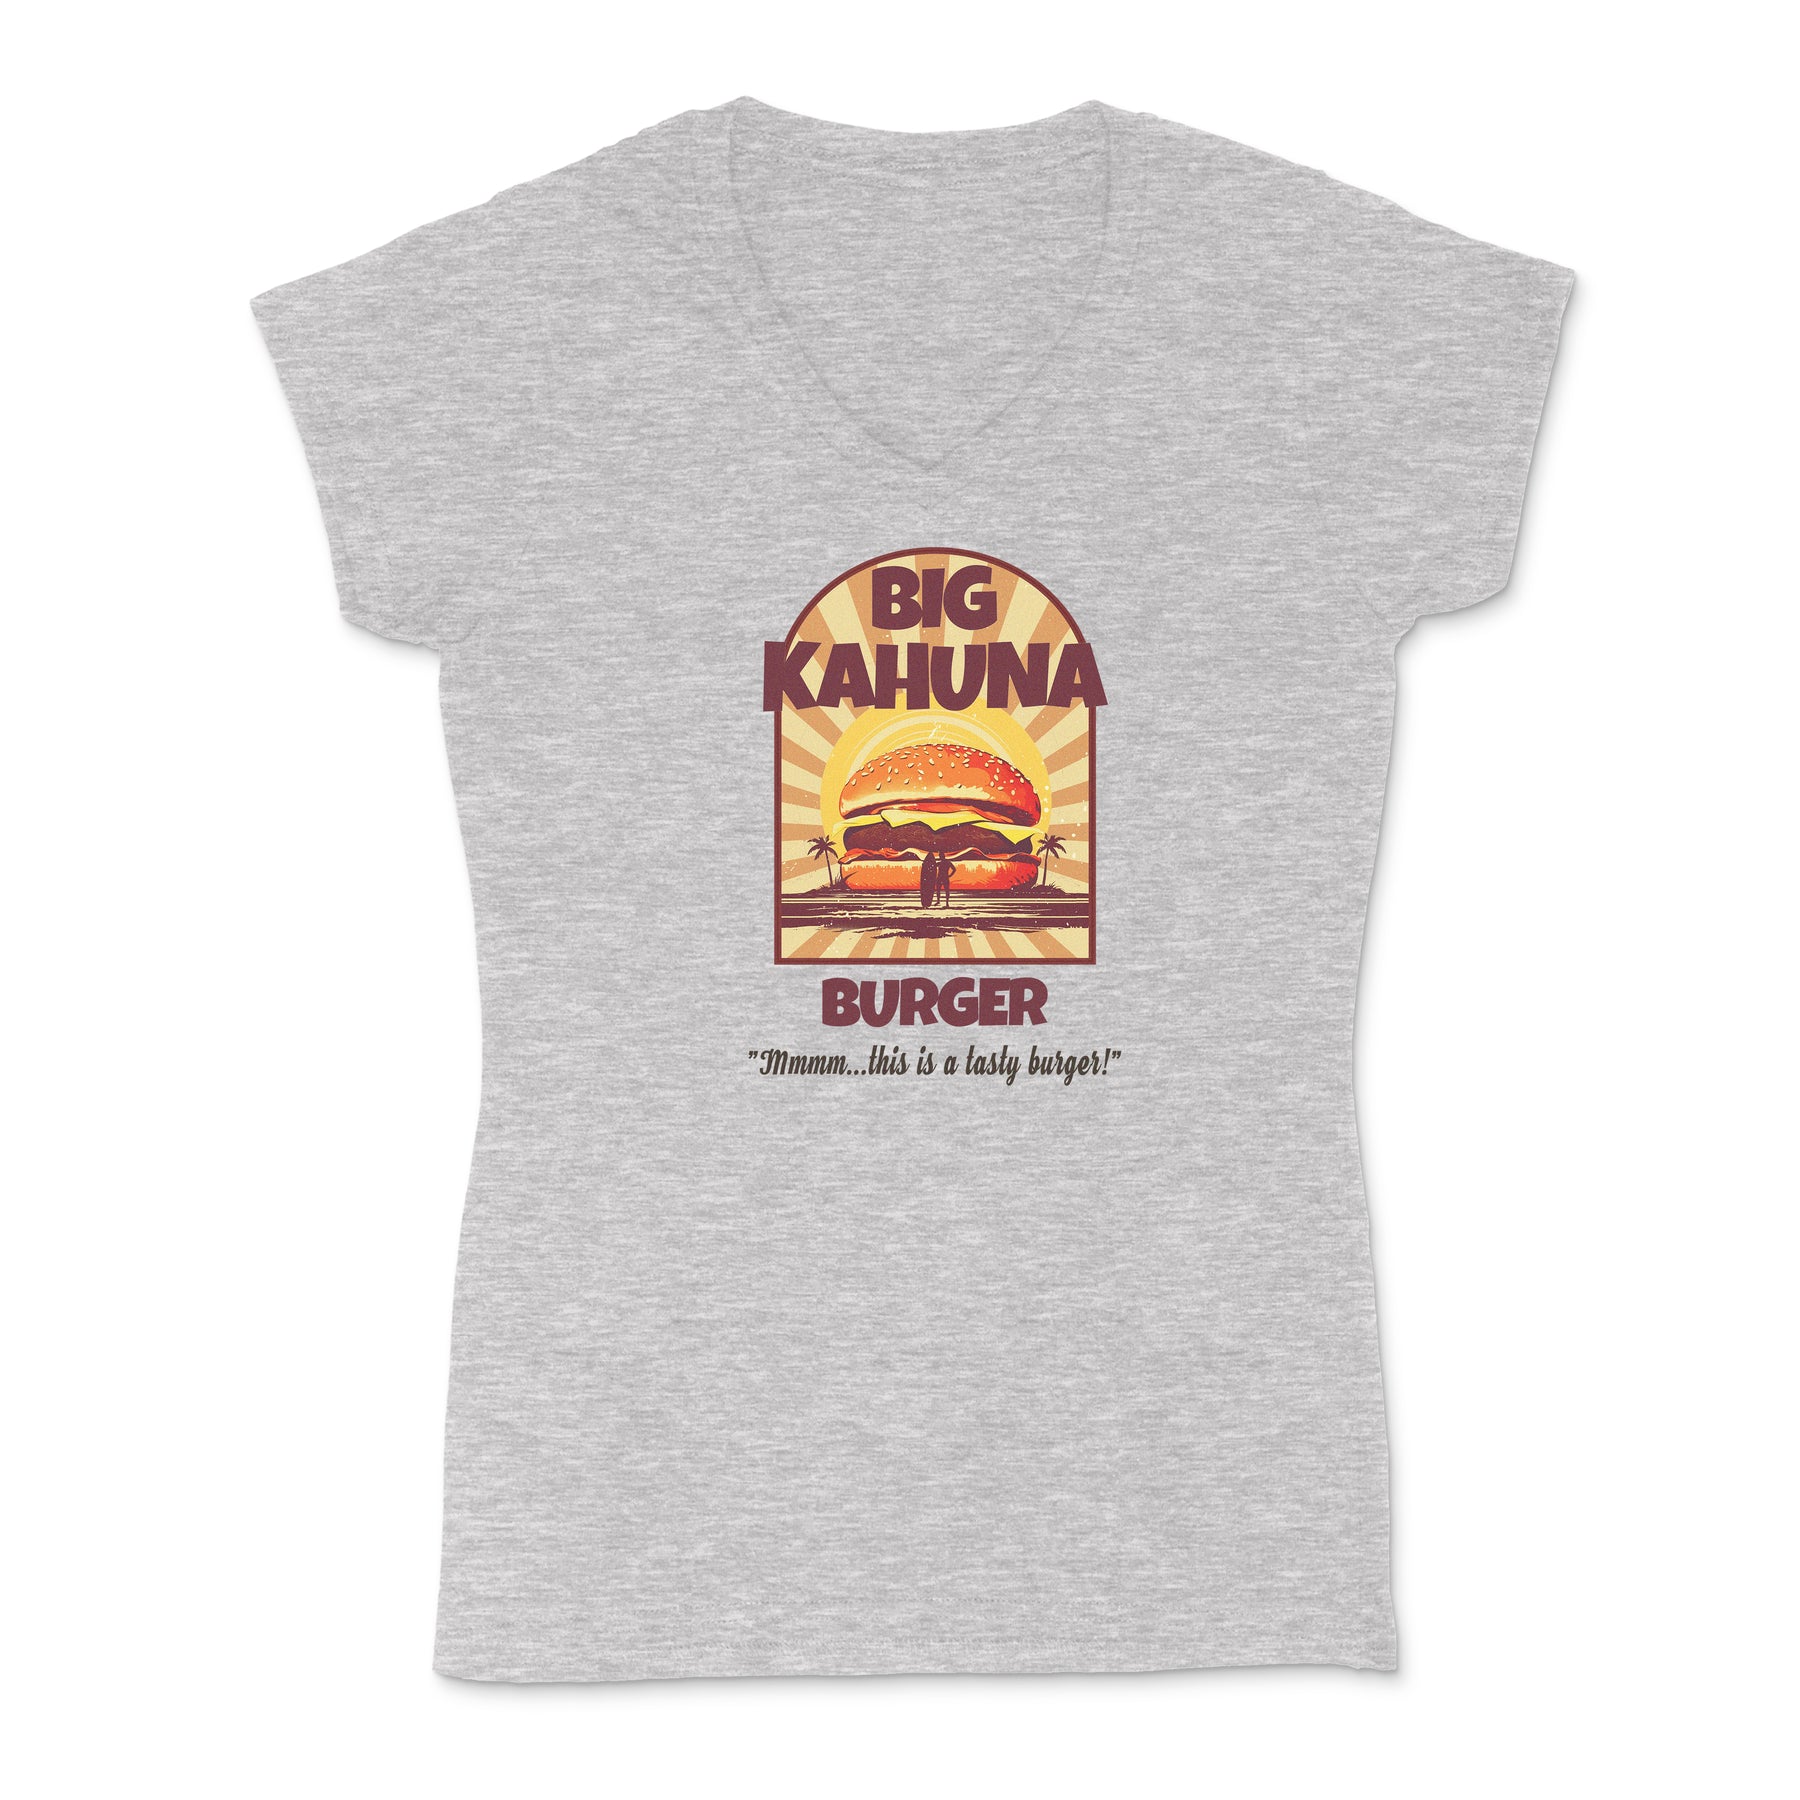 "Big Kahuna Burger" Premium Midweight Ringspun Cotton T-Shirt - Mens/Womens Fits